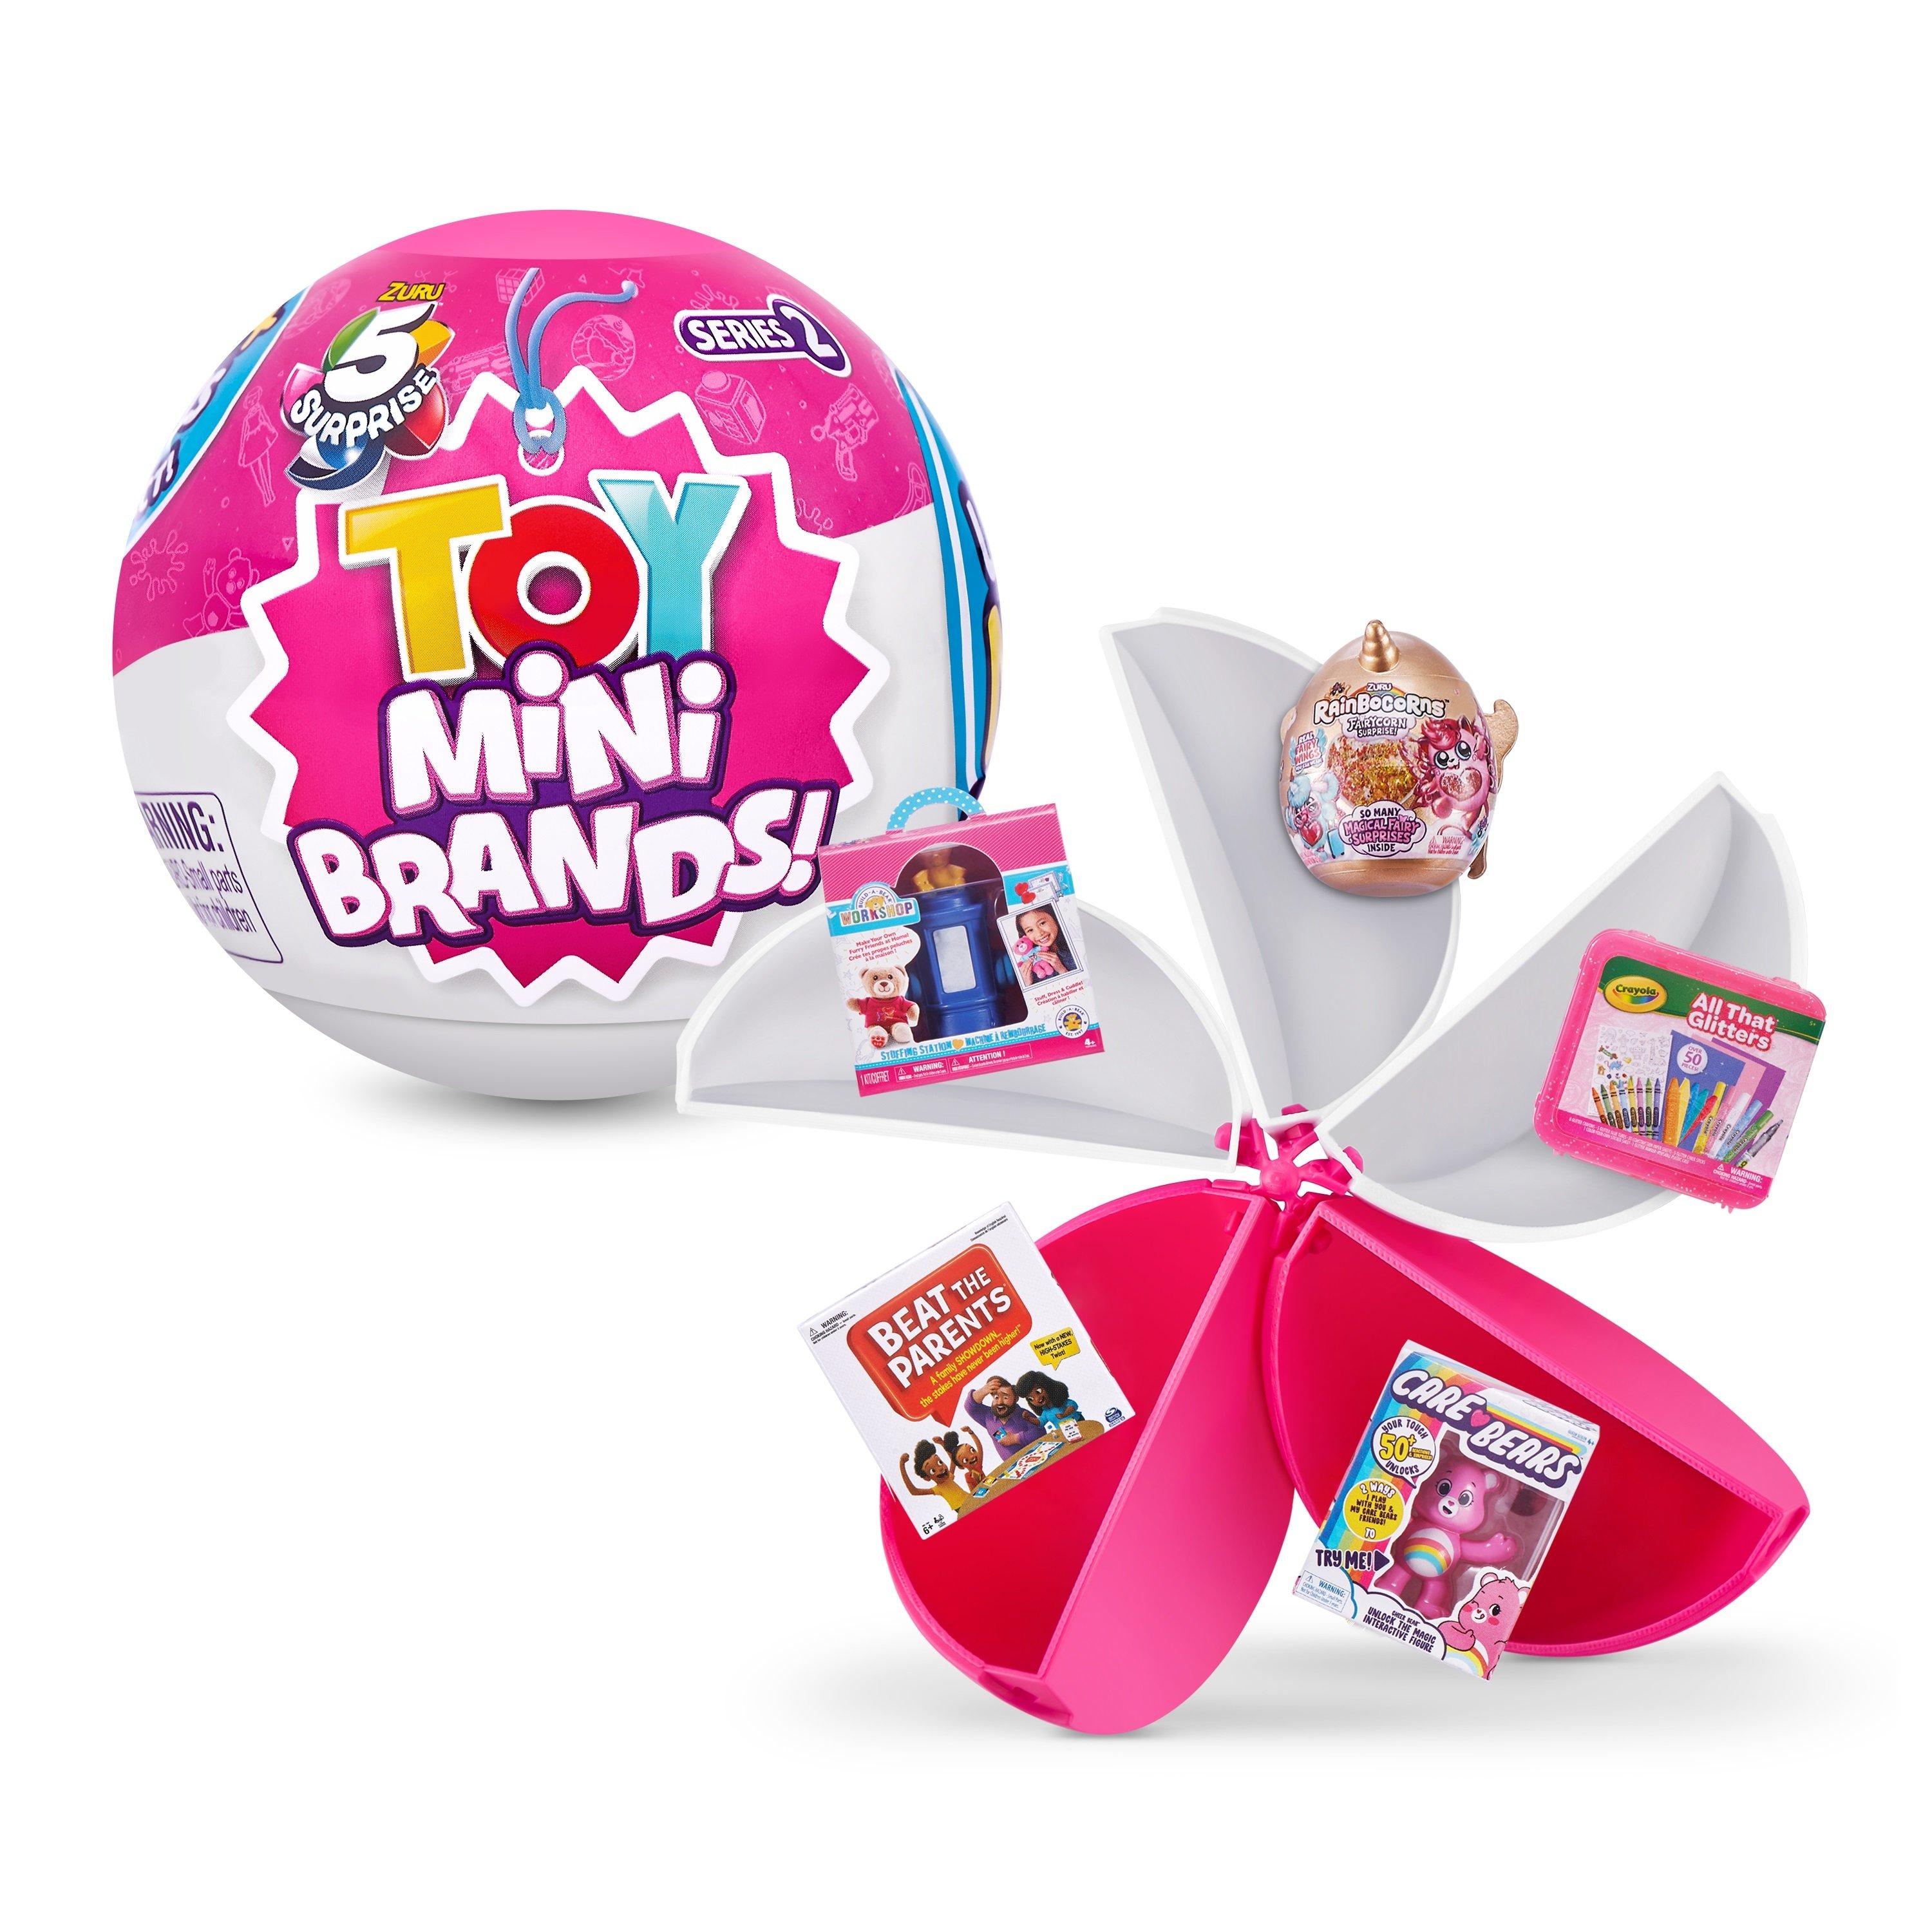 https://media.gamestop.com/i/gamestop/11154614_ALT01/ZURU-5-Surprise-Toy-Mini-Brands-Series-2-Capsule-Collectible-Toy?$pdp$